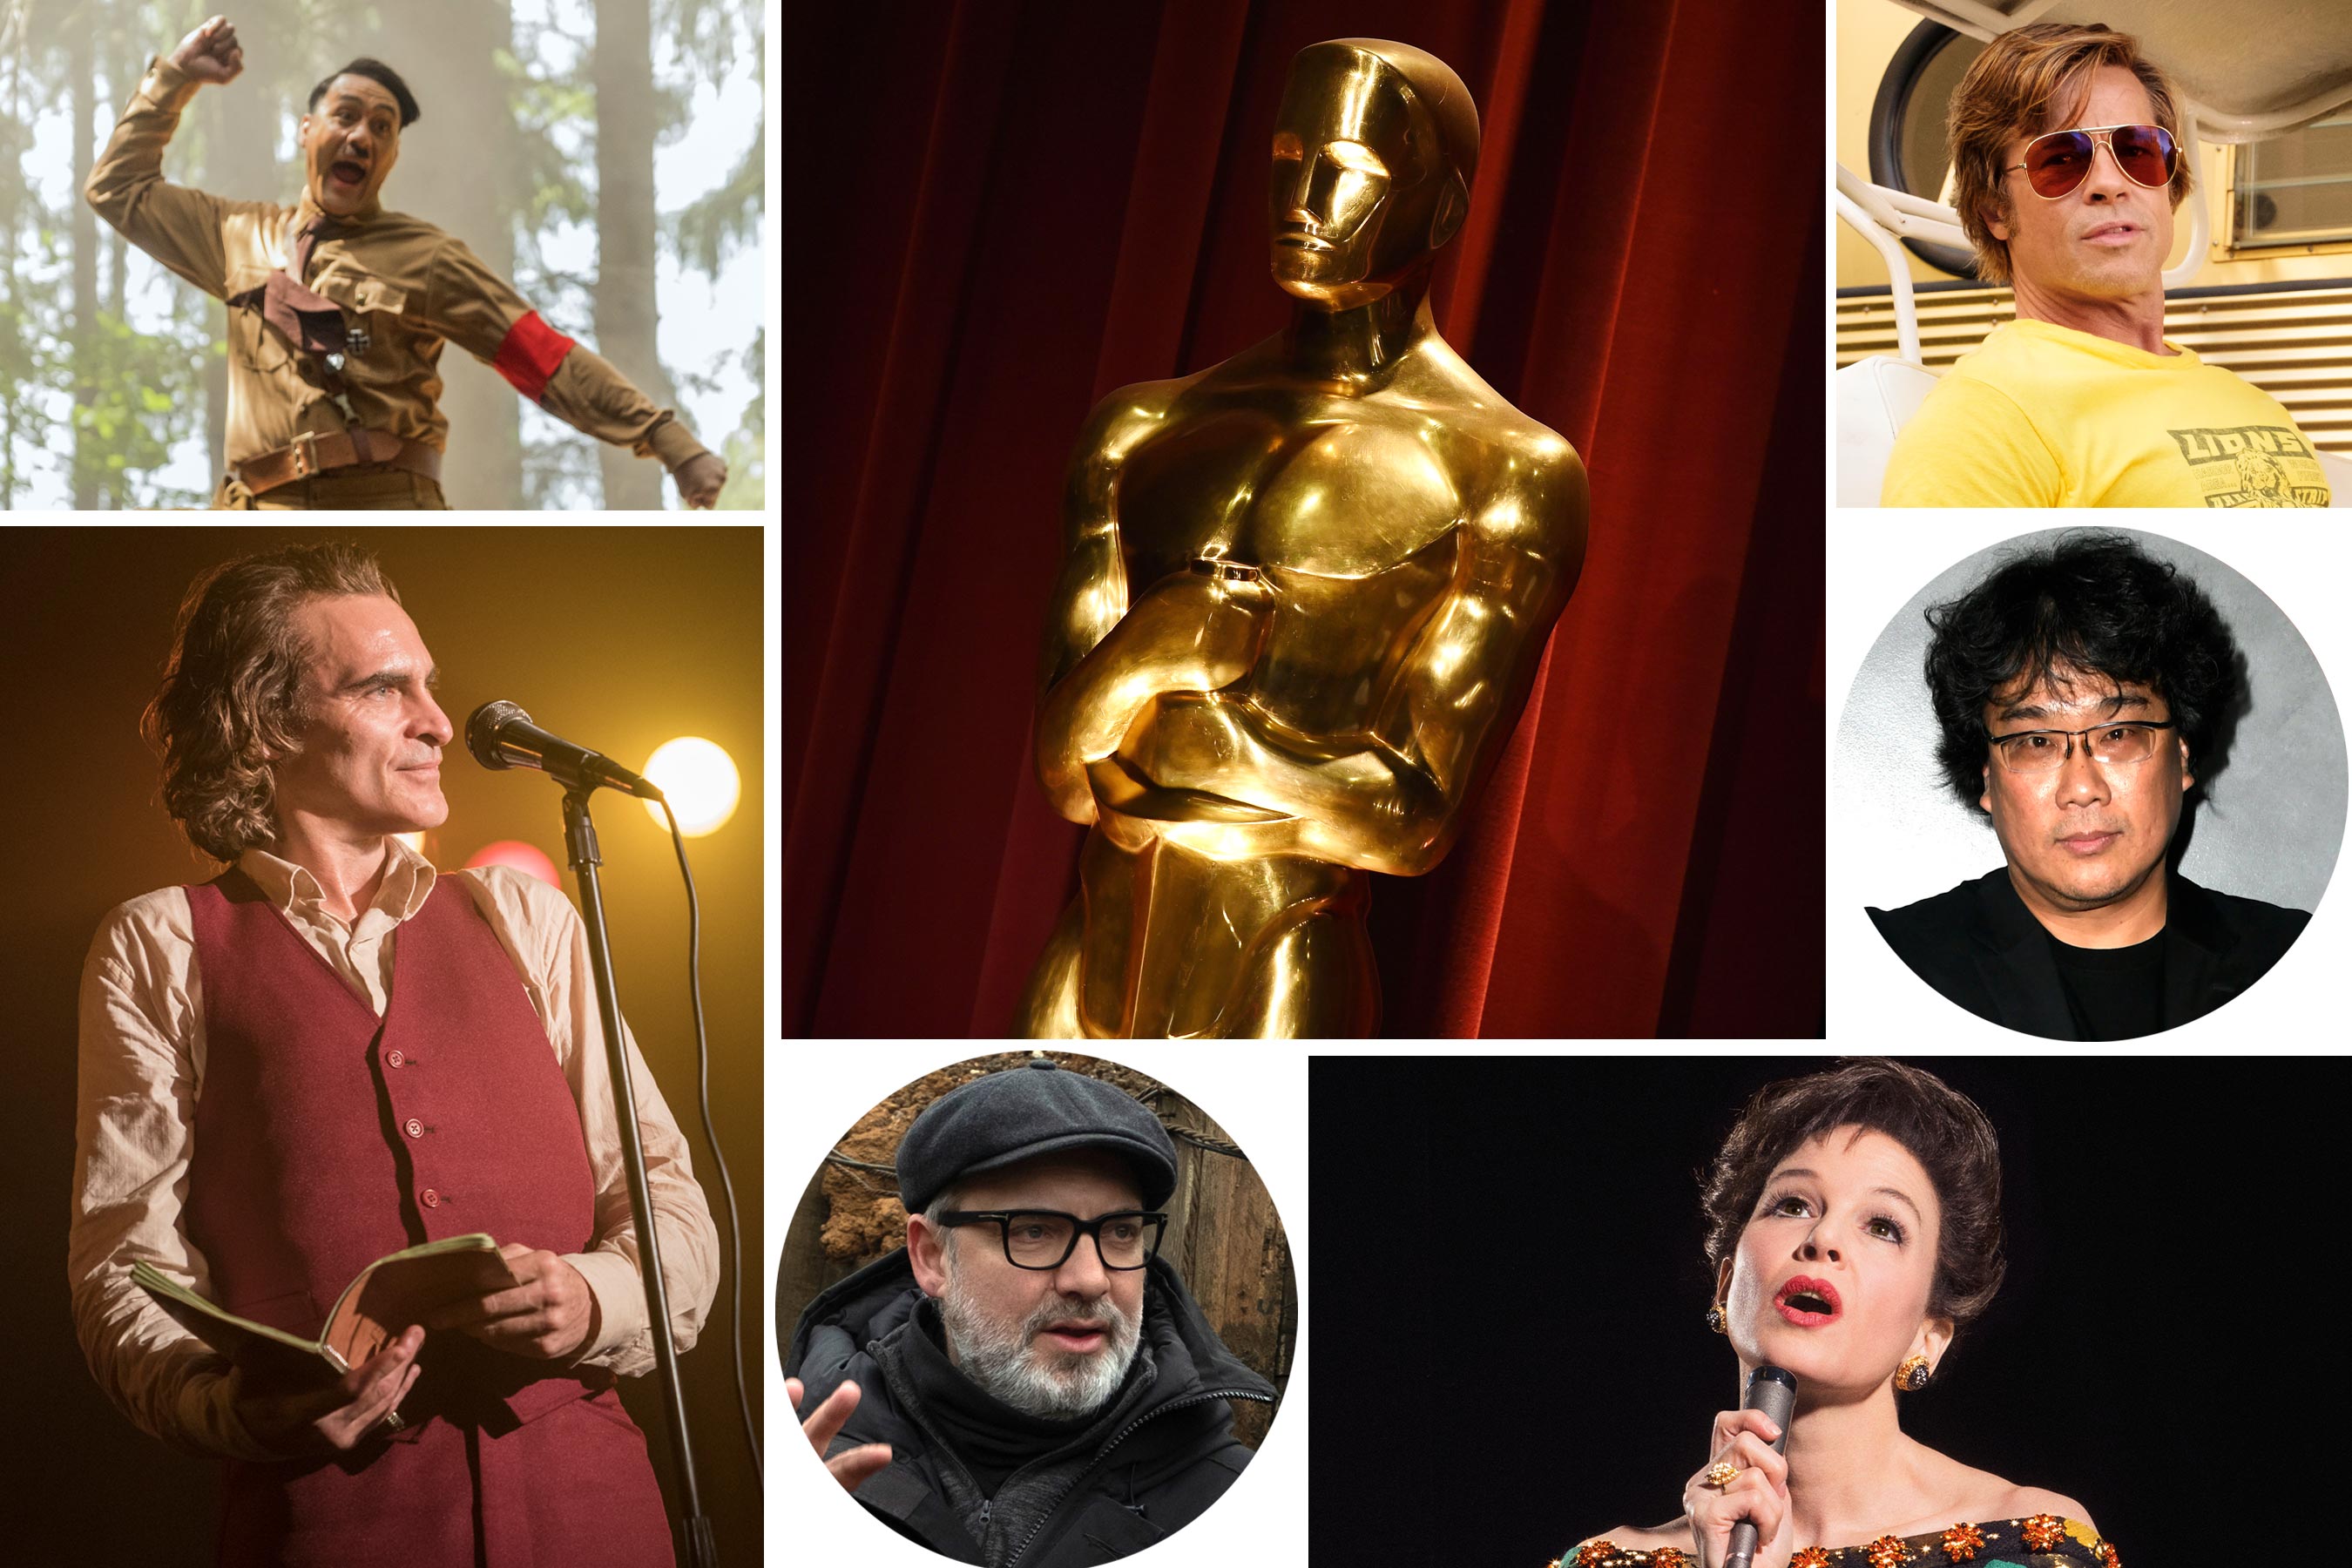 Awards season tracker: Early winners ahead of the 2020 Oscars